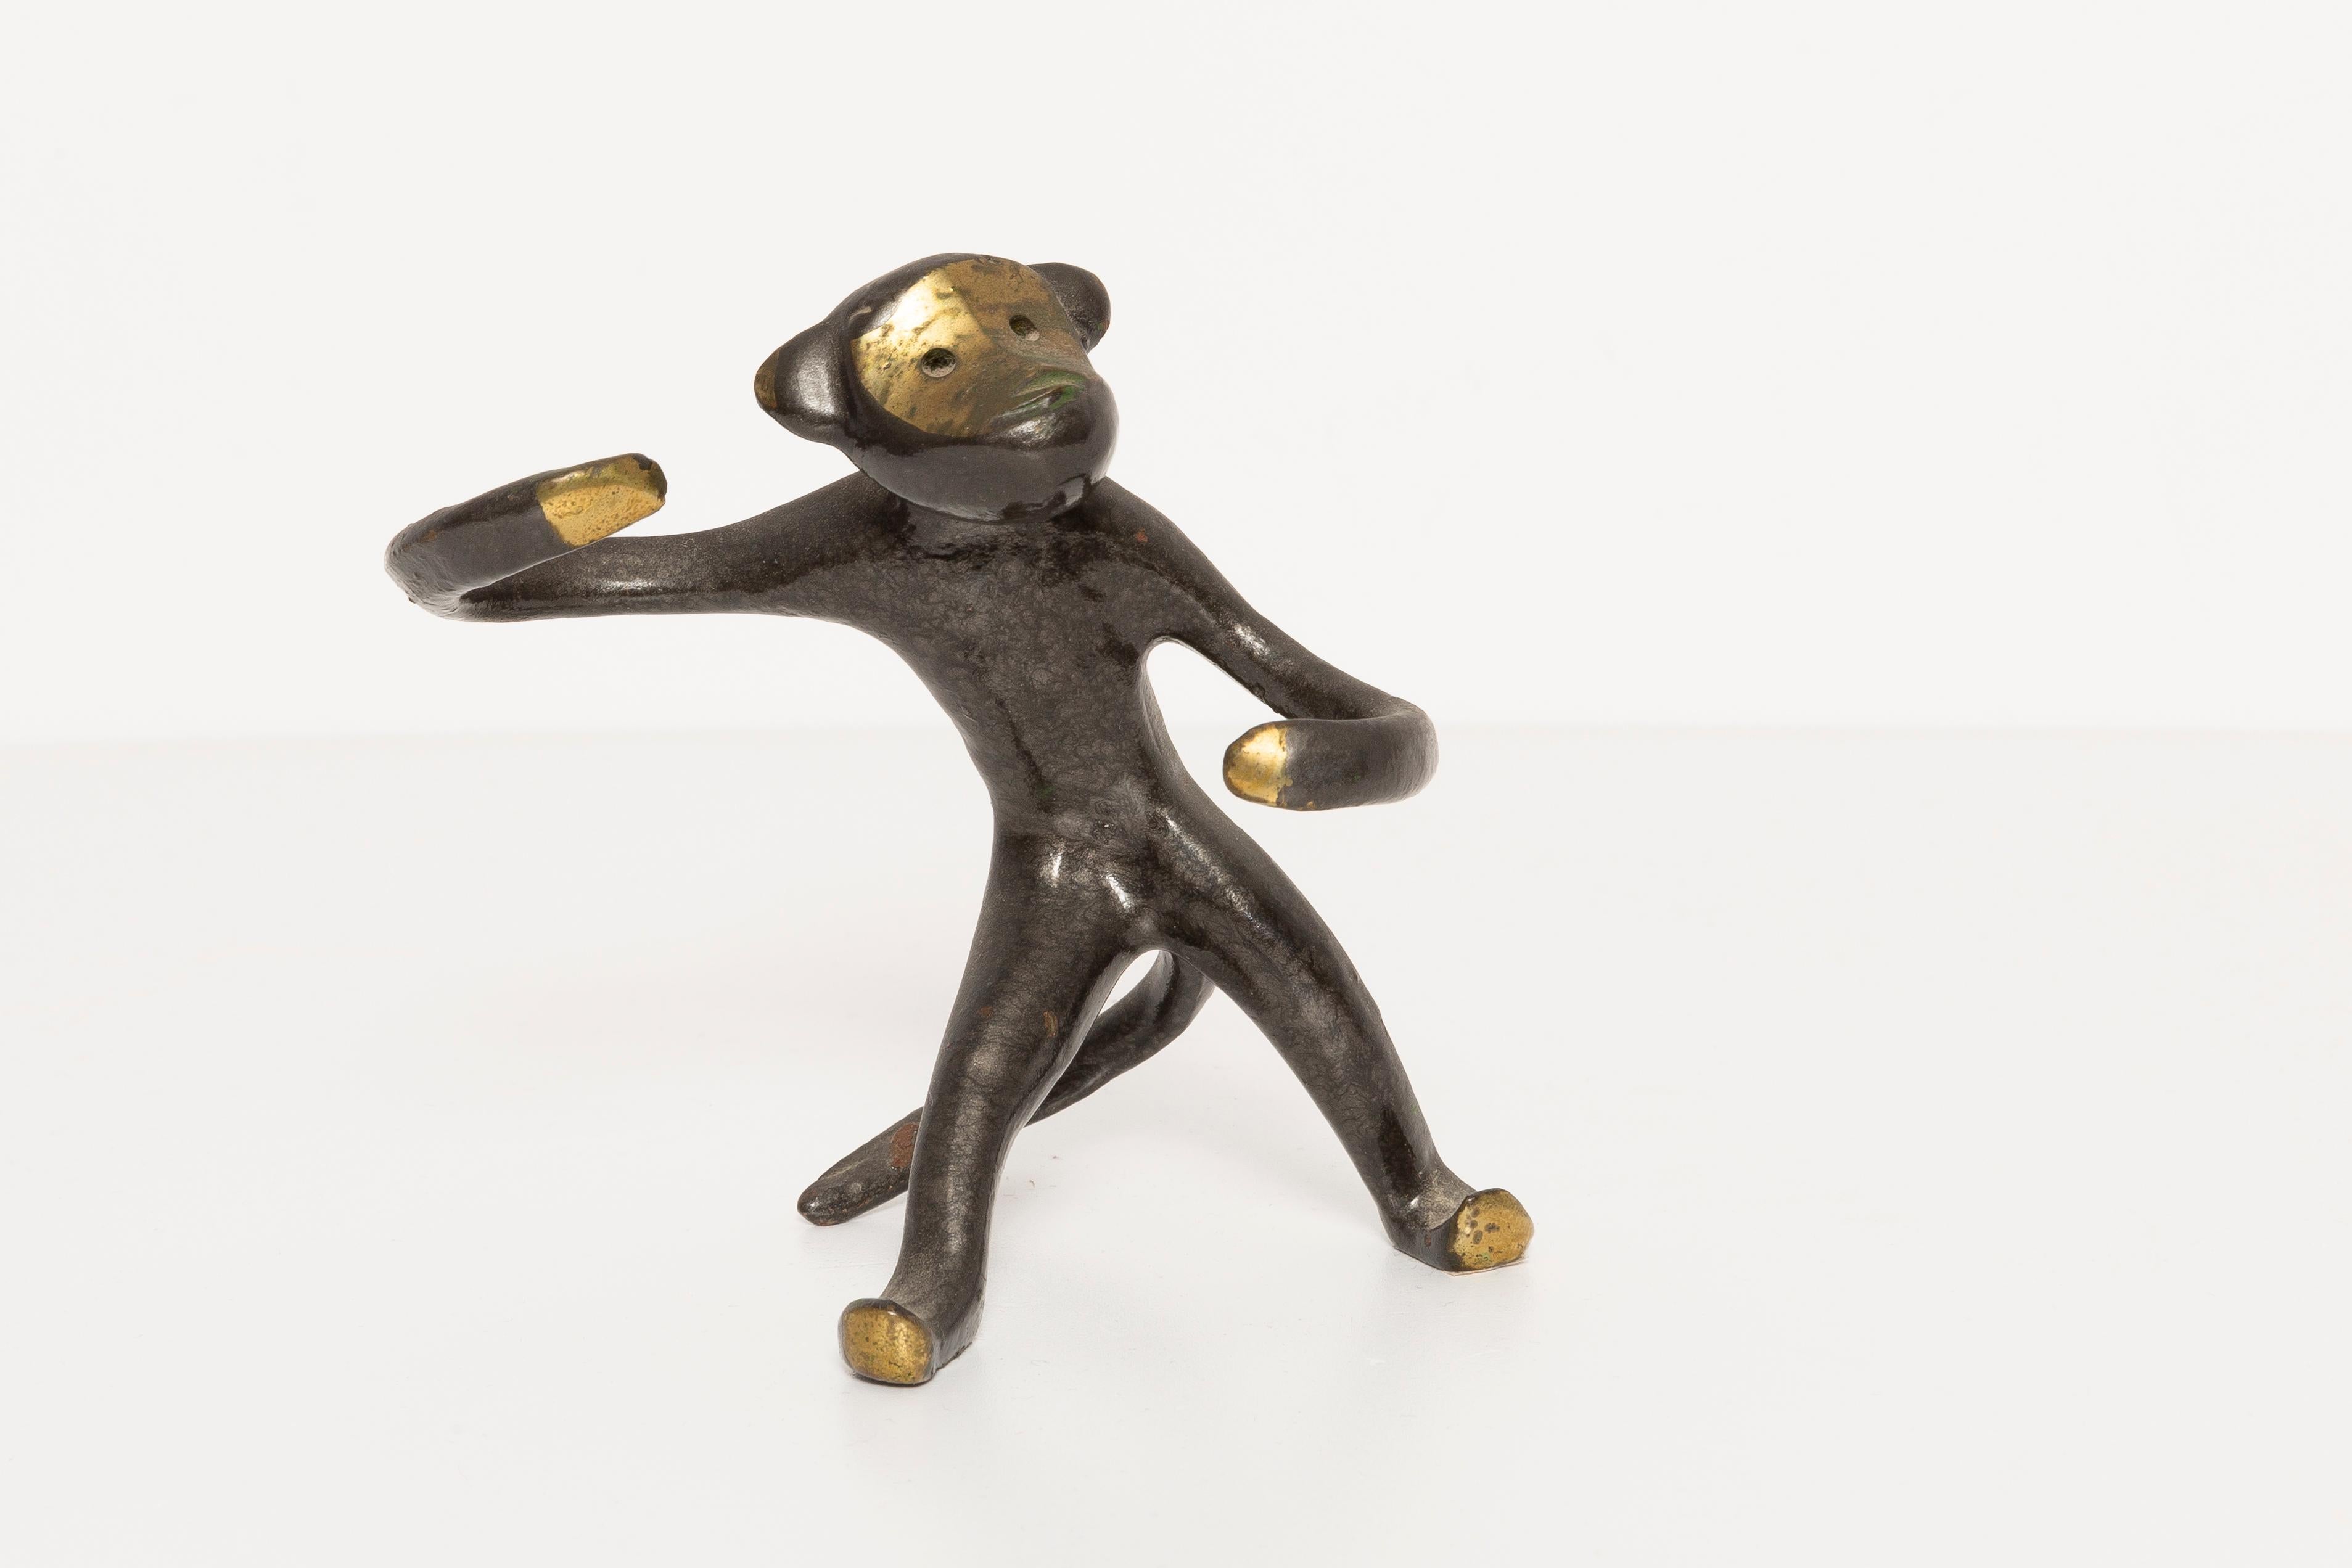 Blackened Monkey Figurine by Walter Bosse, Europe, 1950s